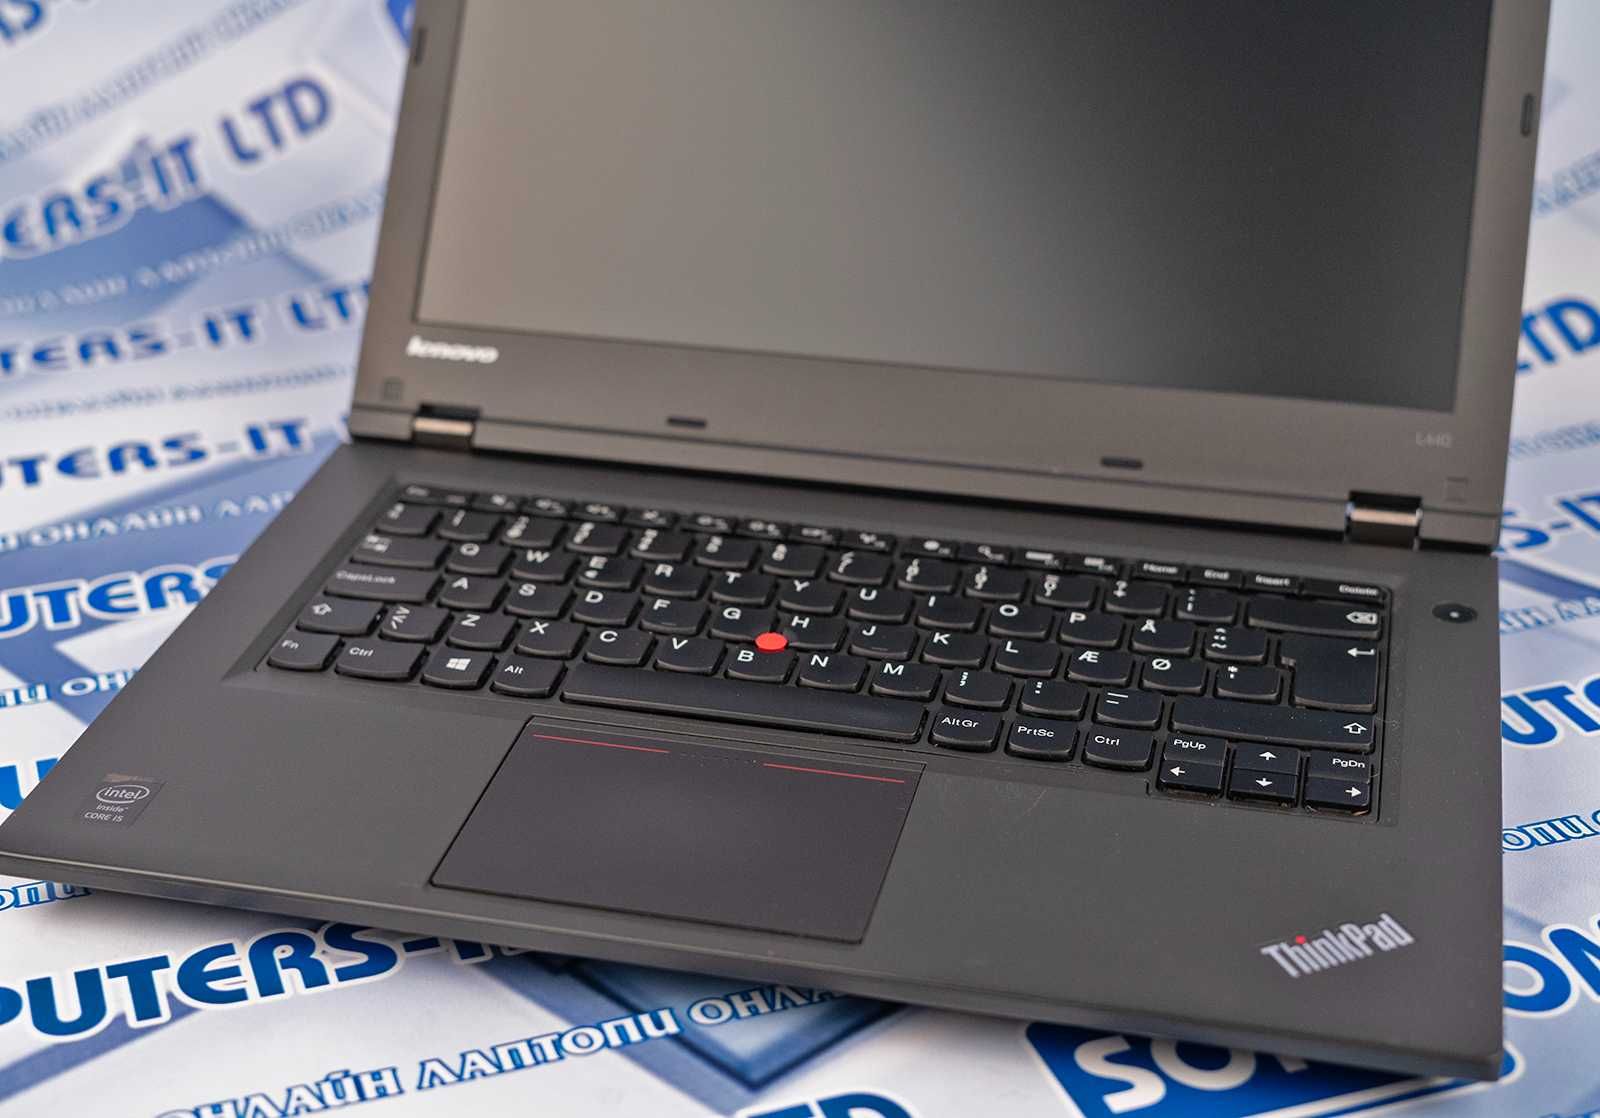 Lenovo ThinkPad L440 /I5-4/8GB DDR3/128GB SSD/14"